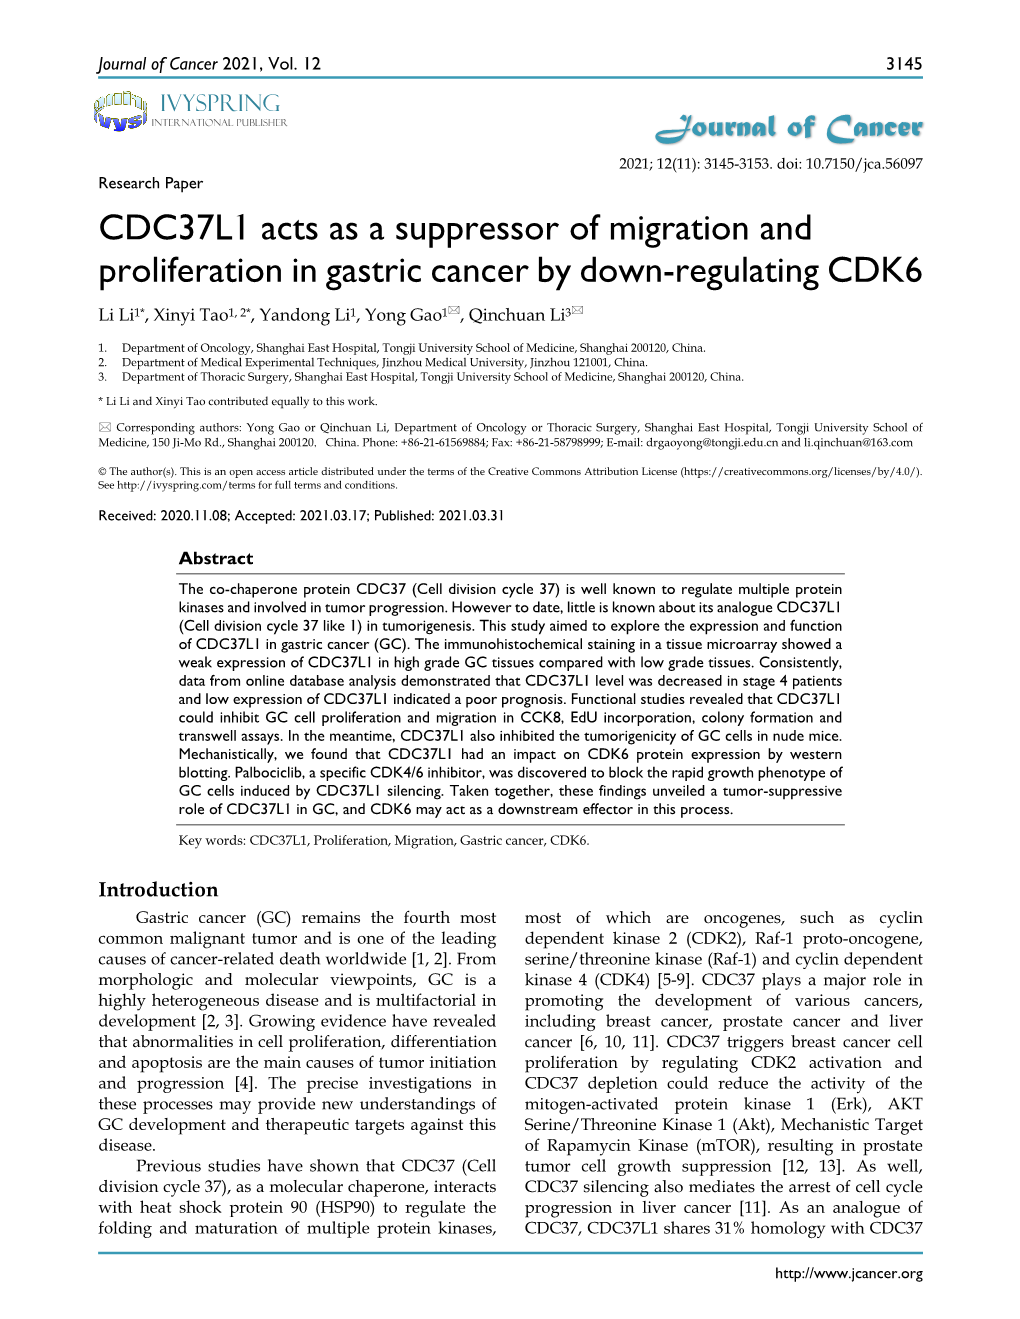 CDC37L1 Acts As a Suppressor of Migration and Proliferation in Gastric Cancer by Down-Regulating CDK6 Li Li1*, Xinyi Tao1, 2*, Yandong Li1, Yong Gao1, Qinchuan Li3